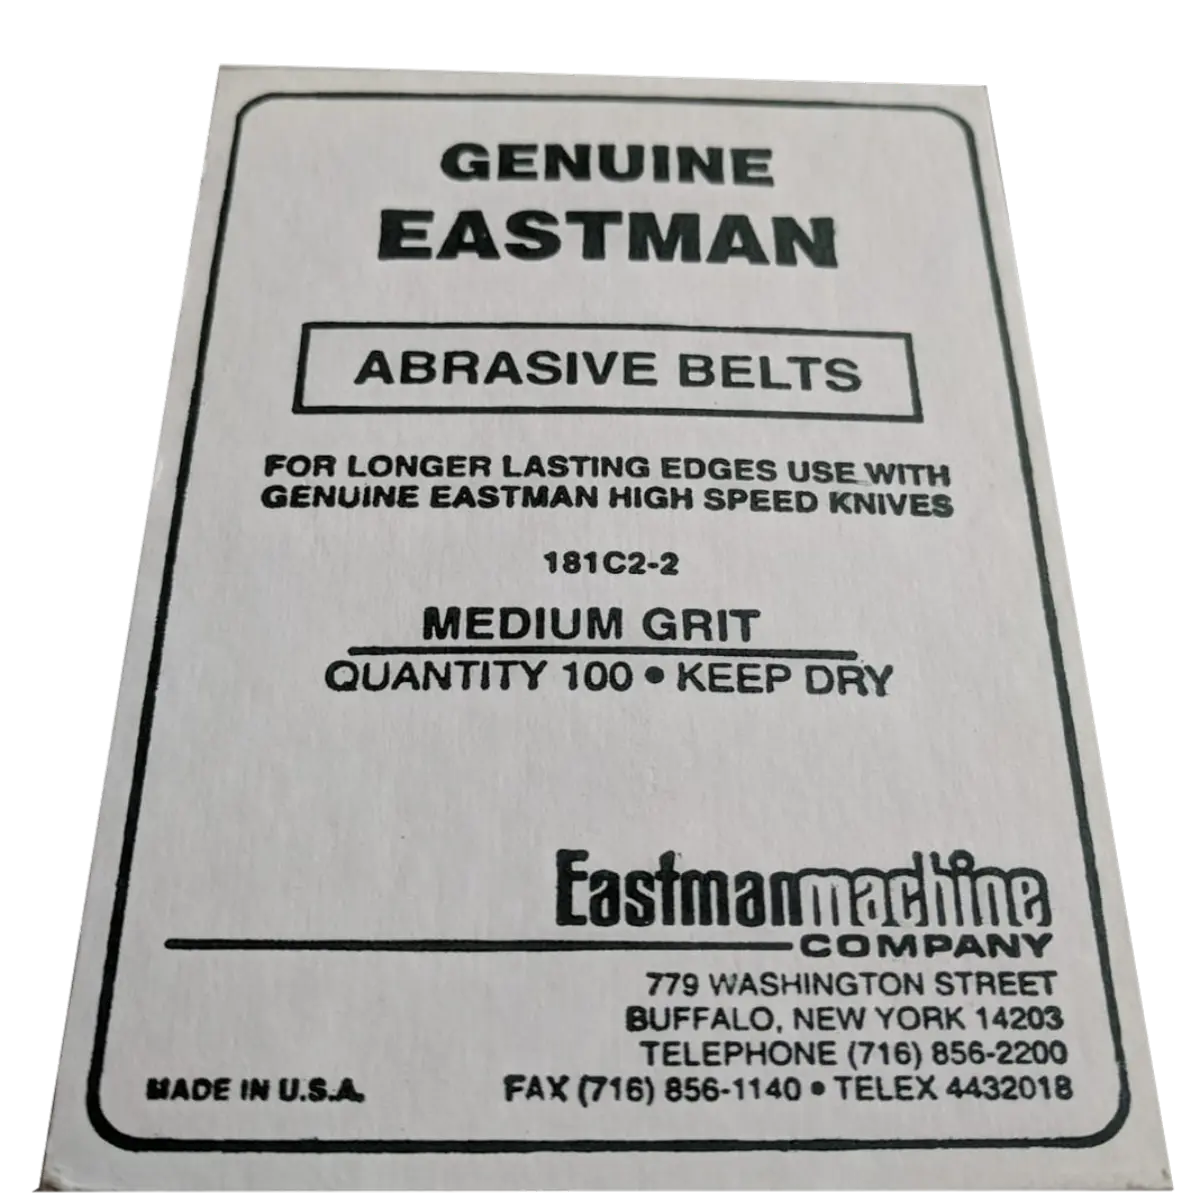 Eastman Sharpening Belts, green, medium